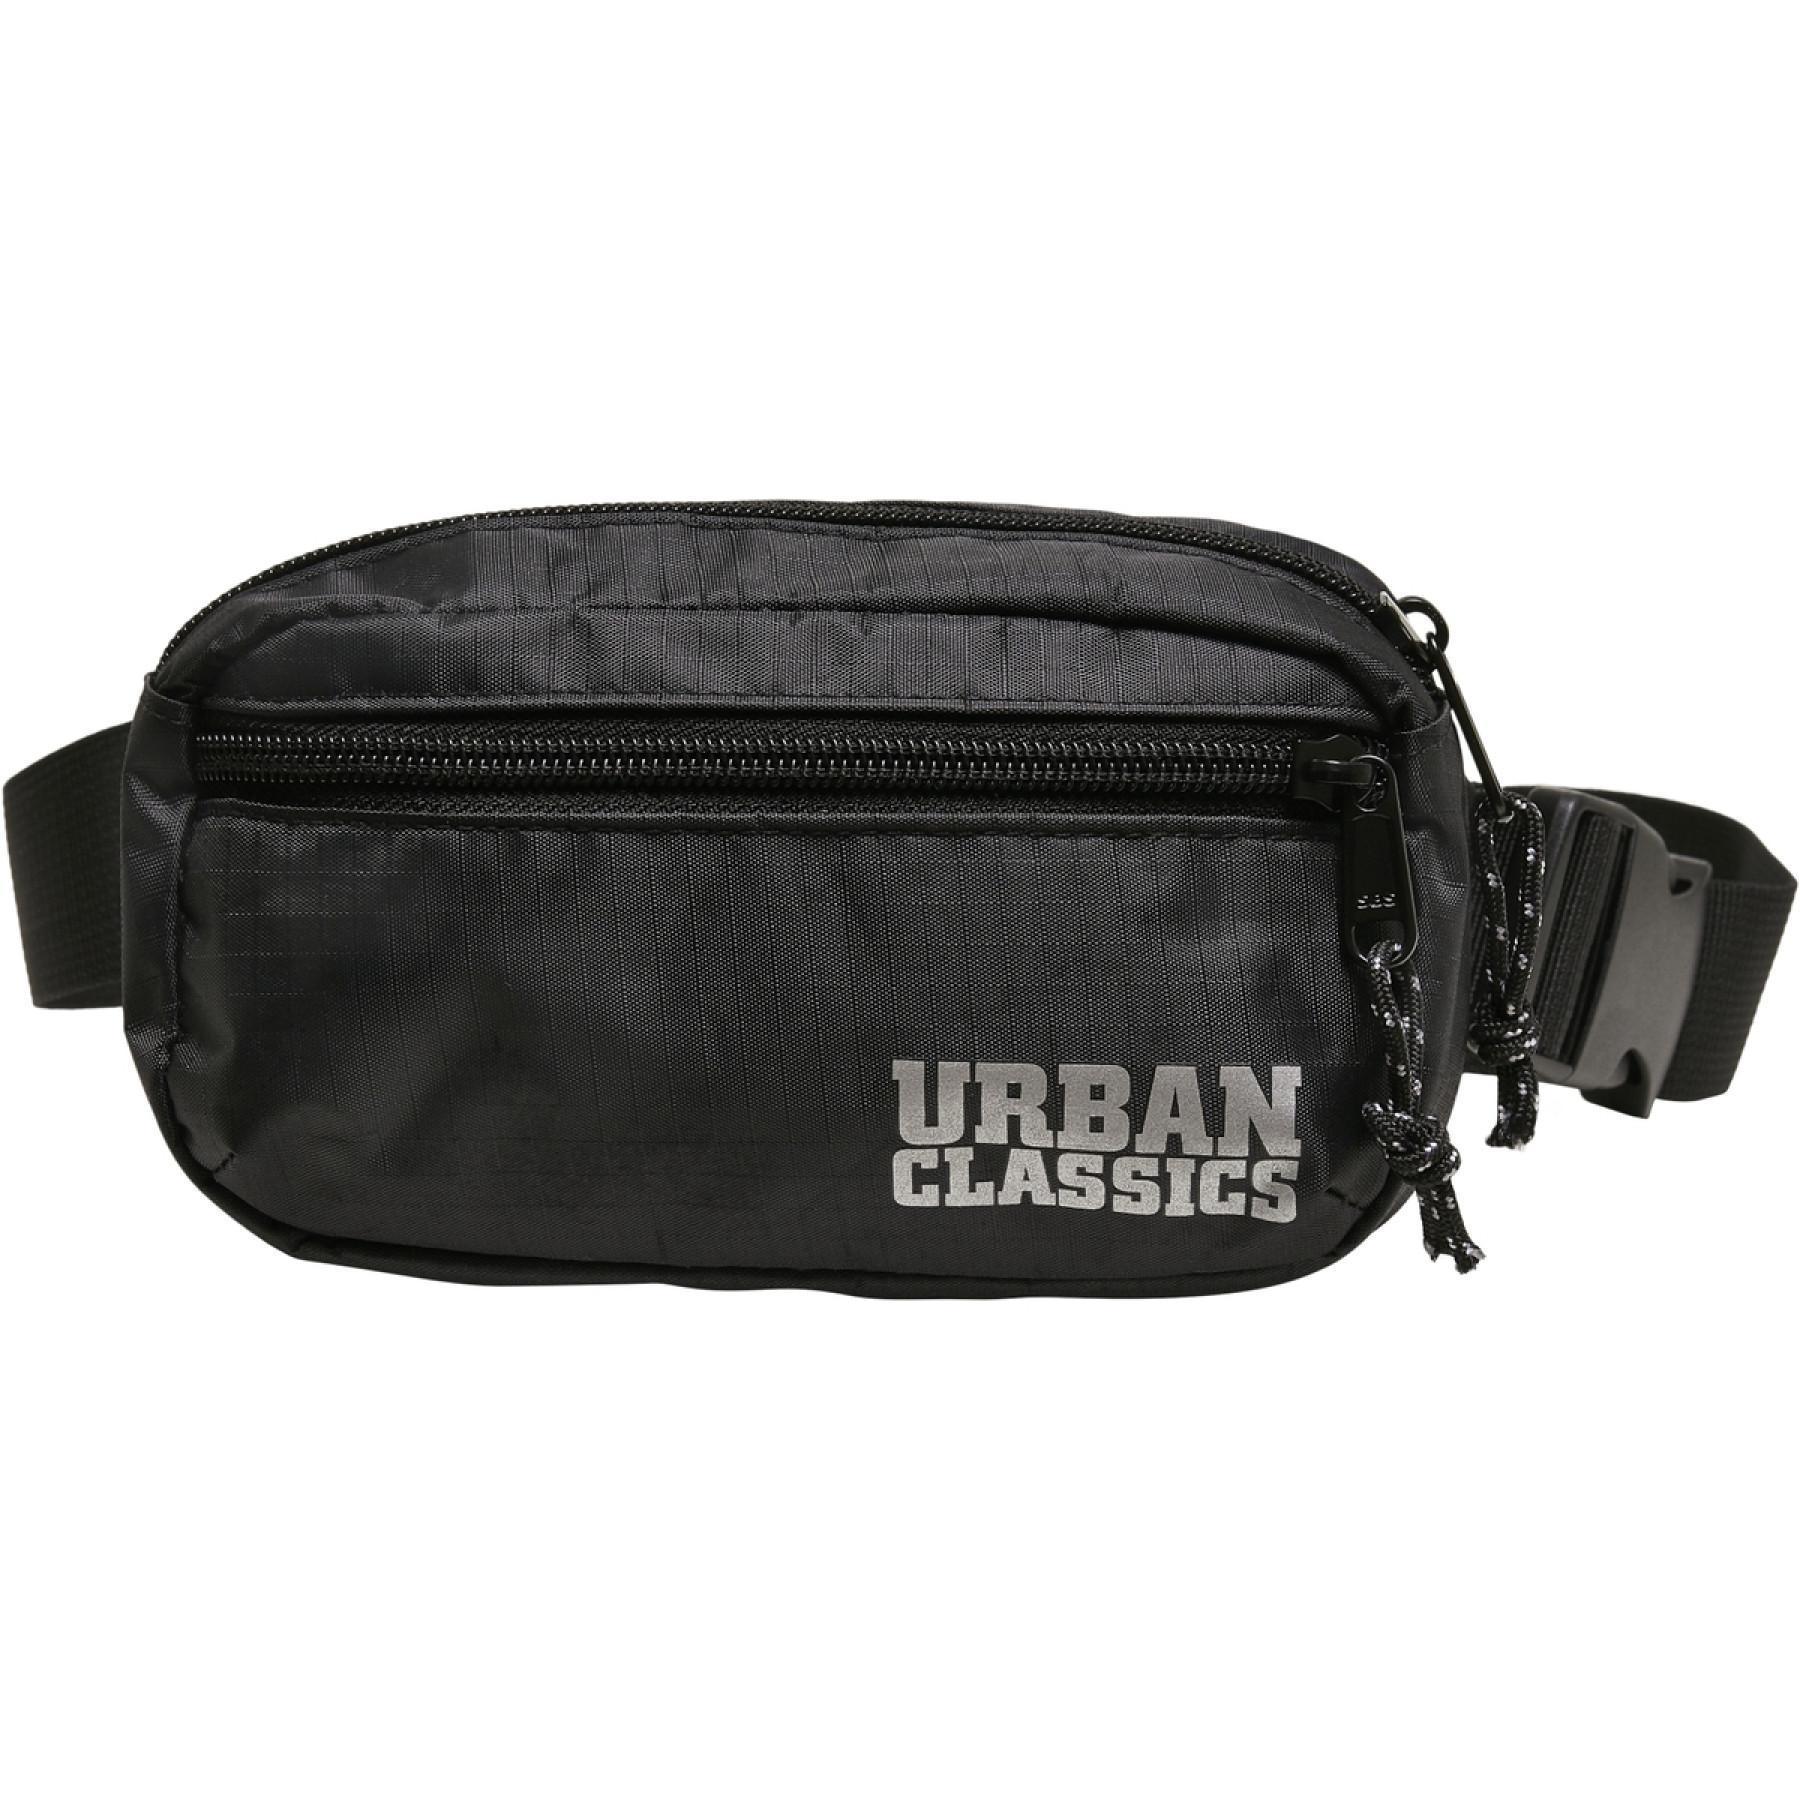 Bag Urban Classics recyclable indéchirable hip